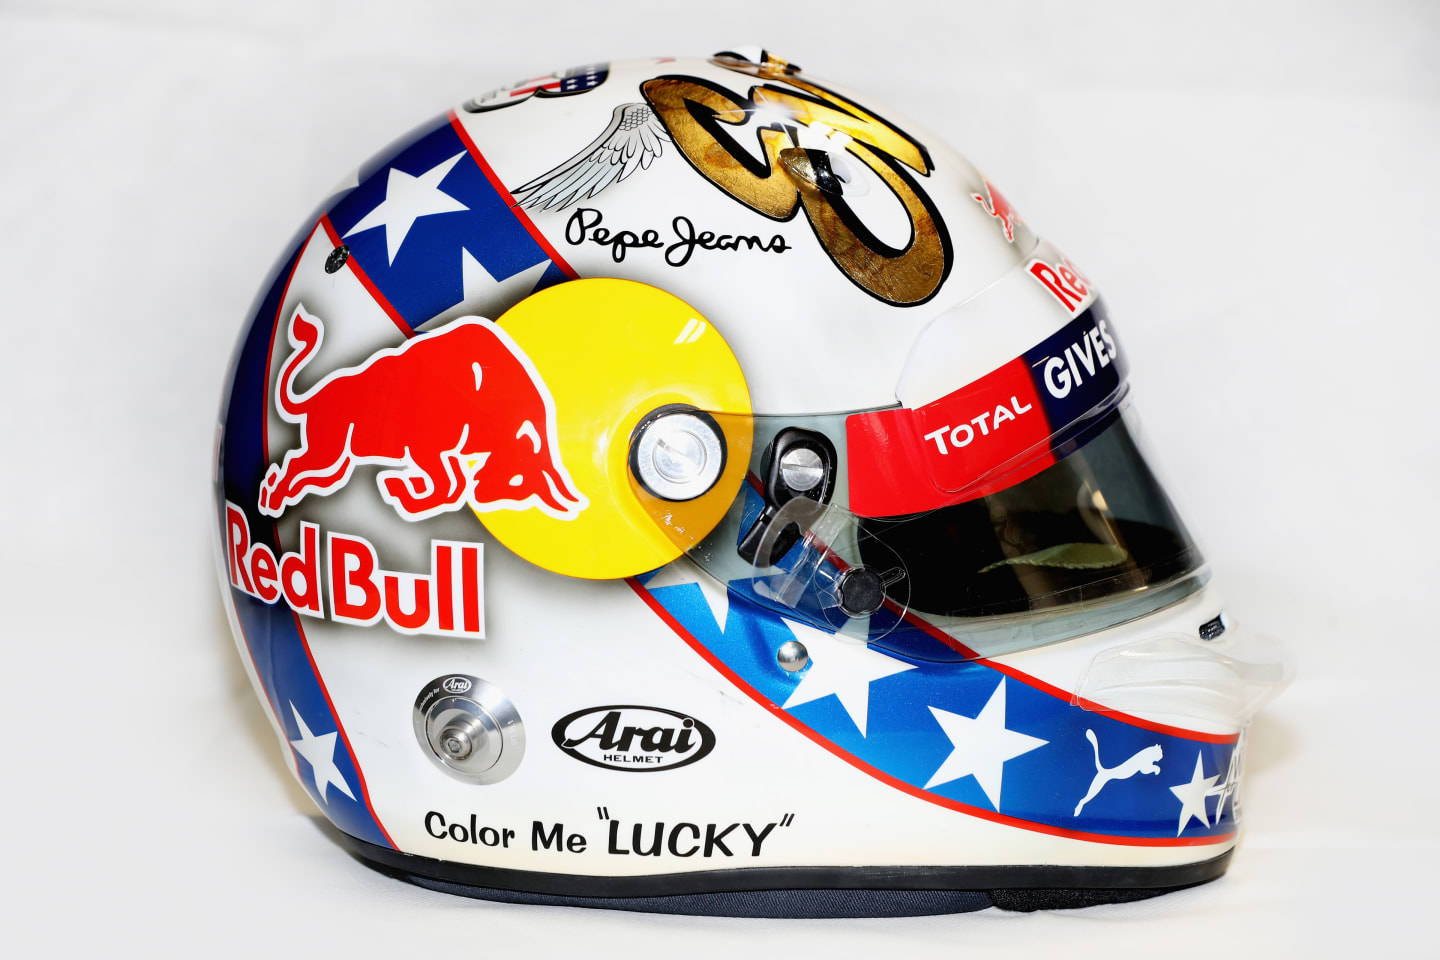 Ricciardo paid tribute to motorcycle stuntman Evel Knievel for the 2016 US Grand Prix